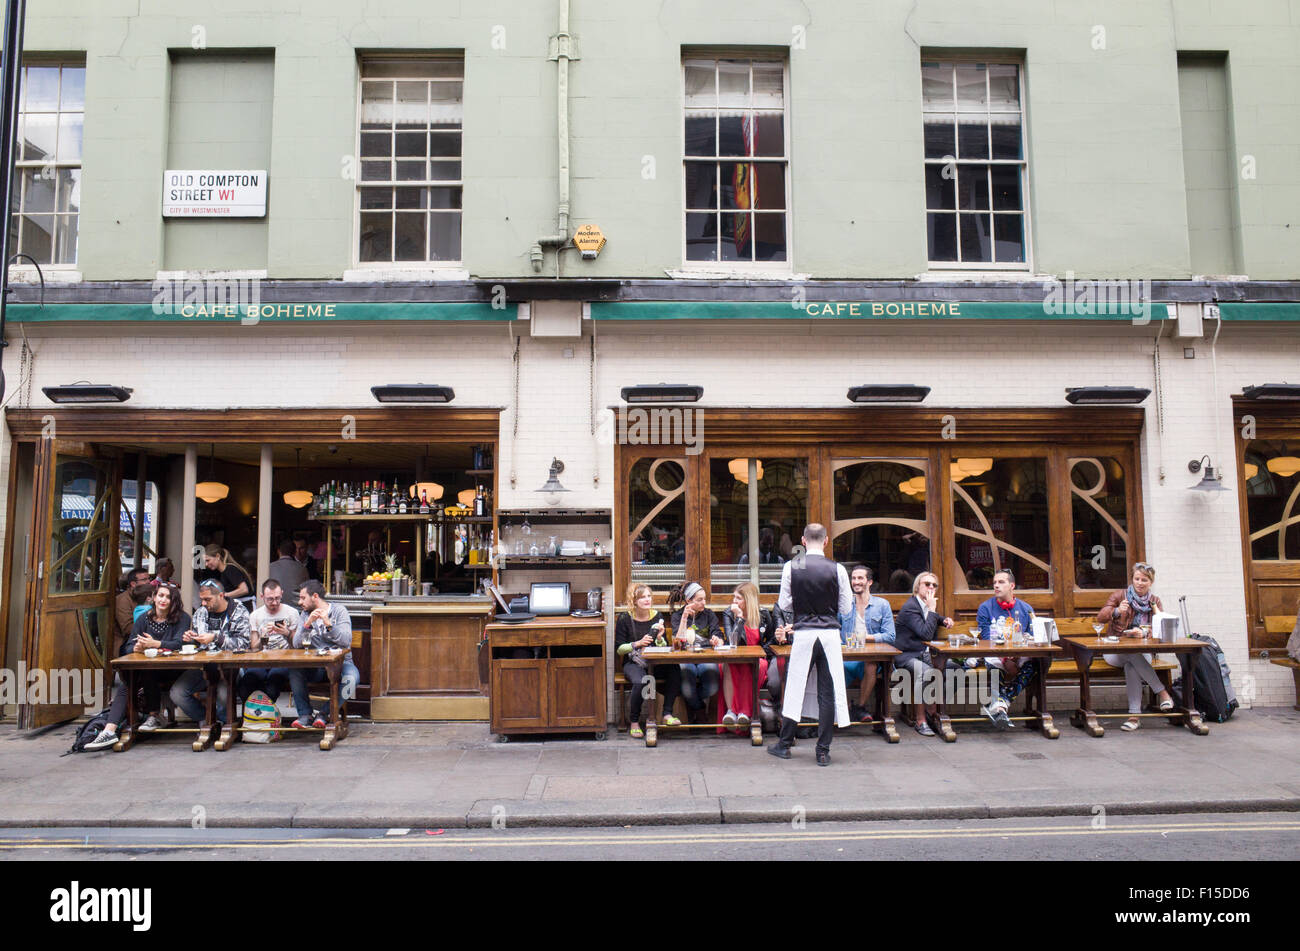 Cafe Boheme in Old Compton Street, Soho, London, England, Vereinigtes Königreich Stockfoto